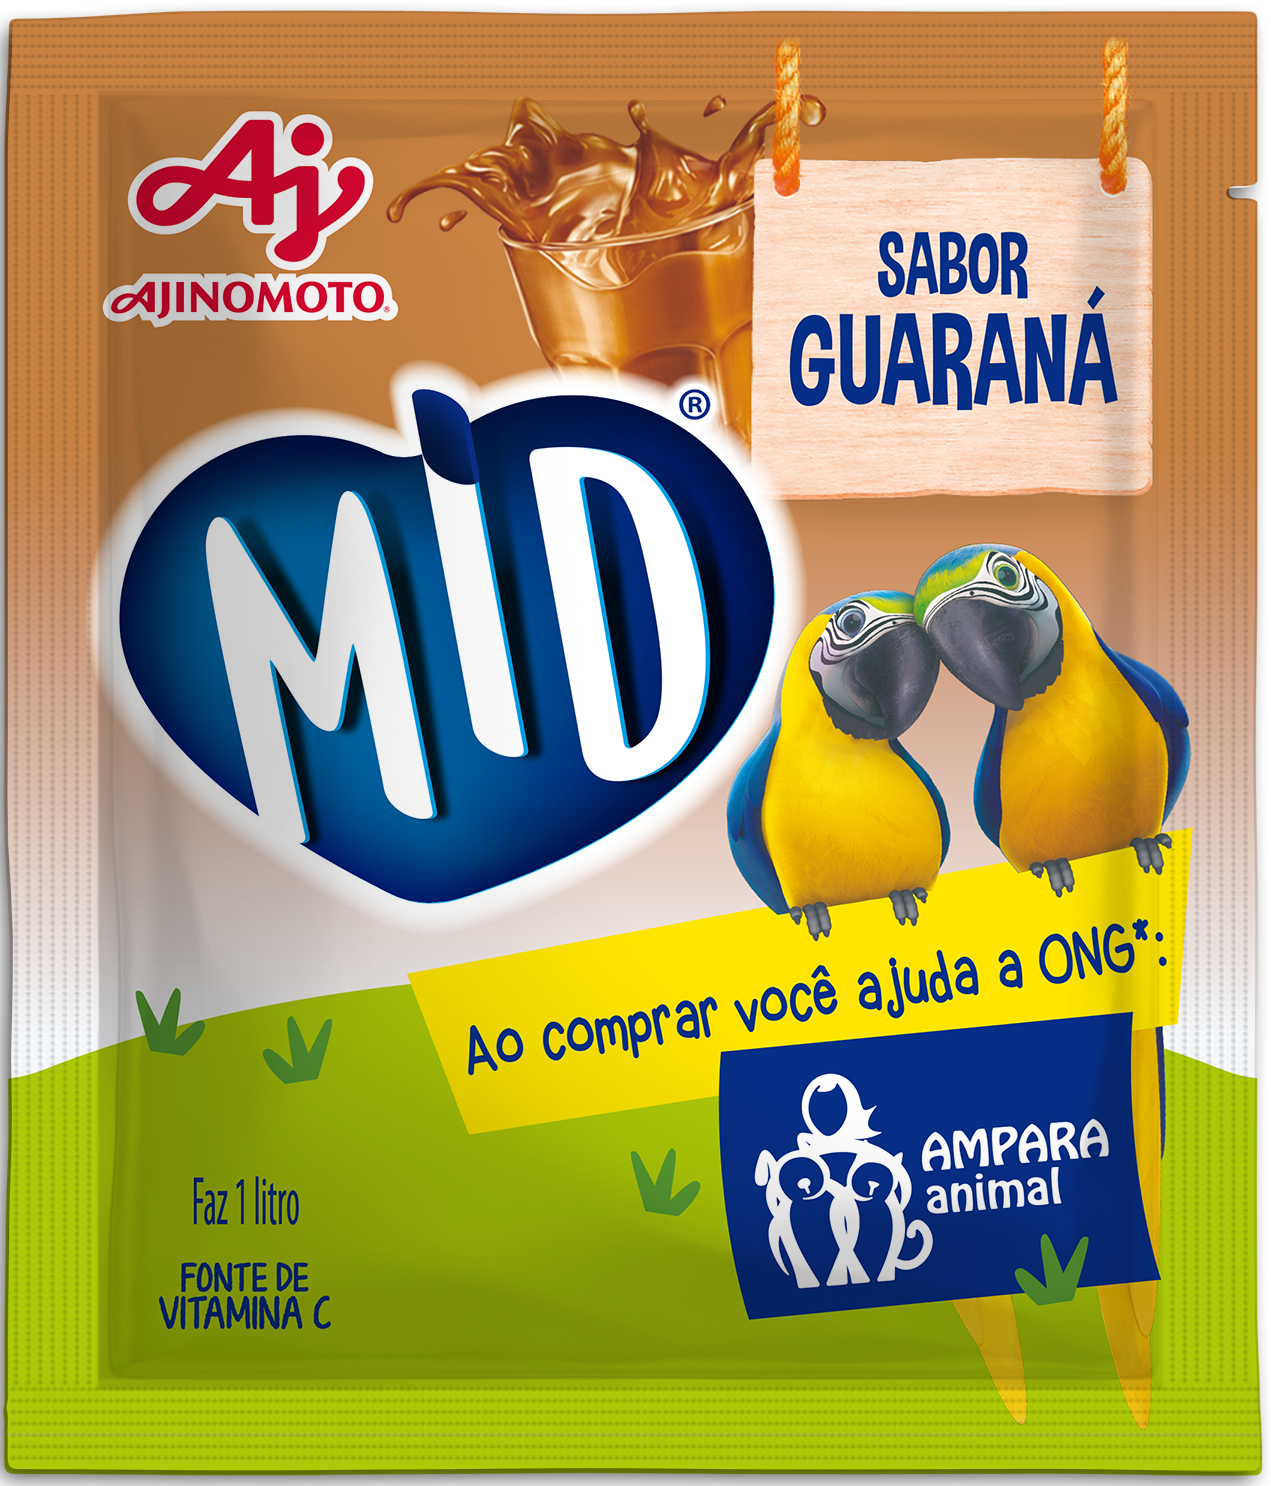 MID® Guaraná